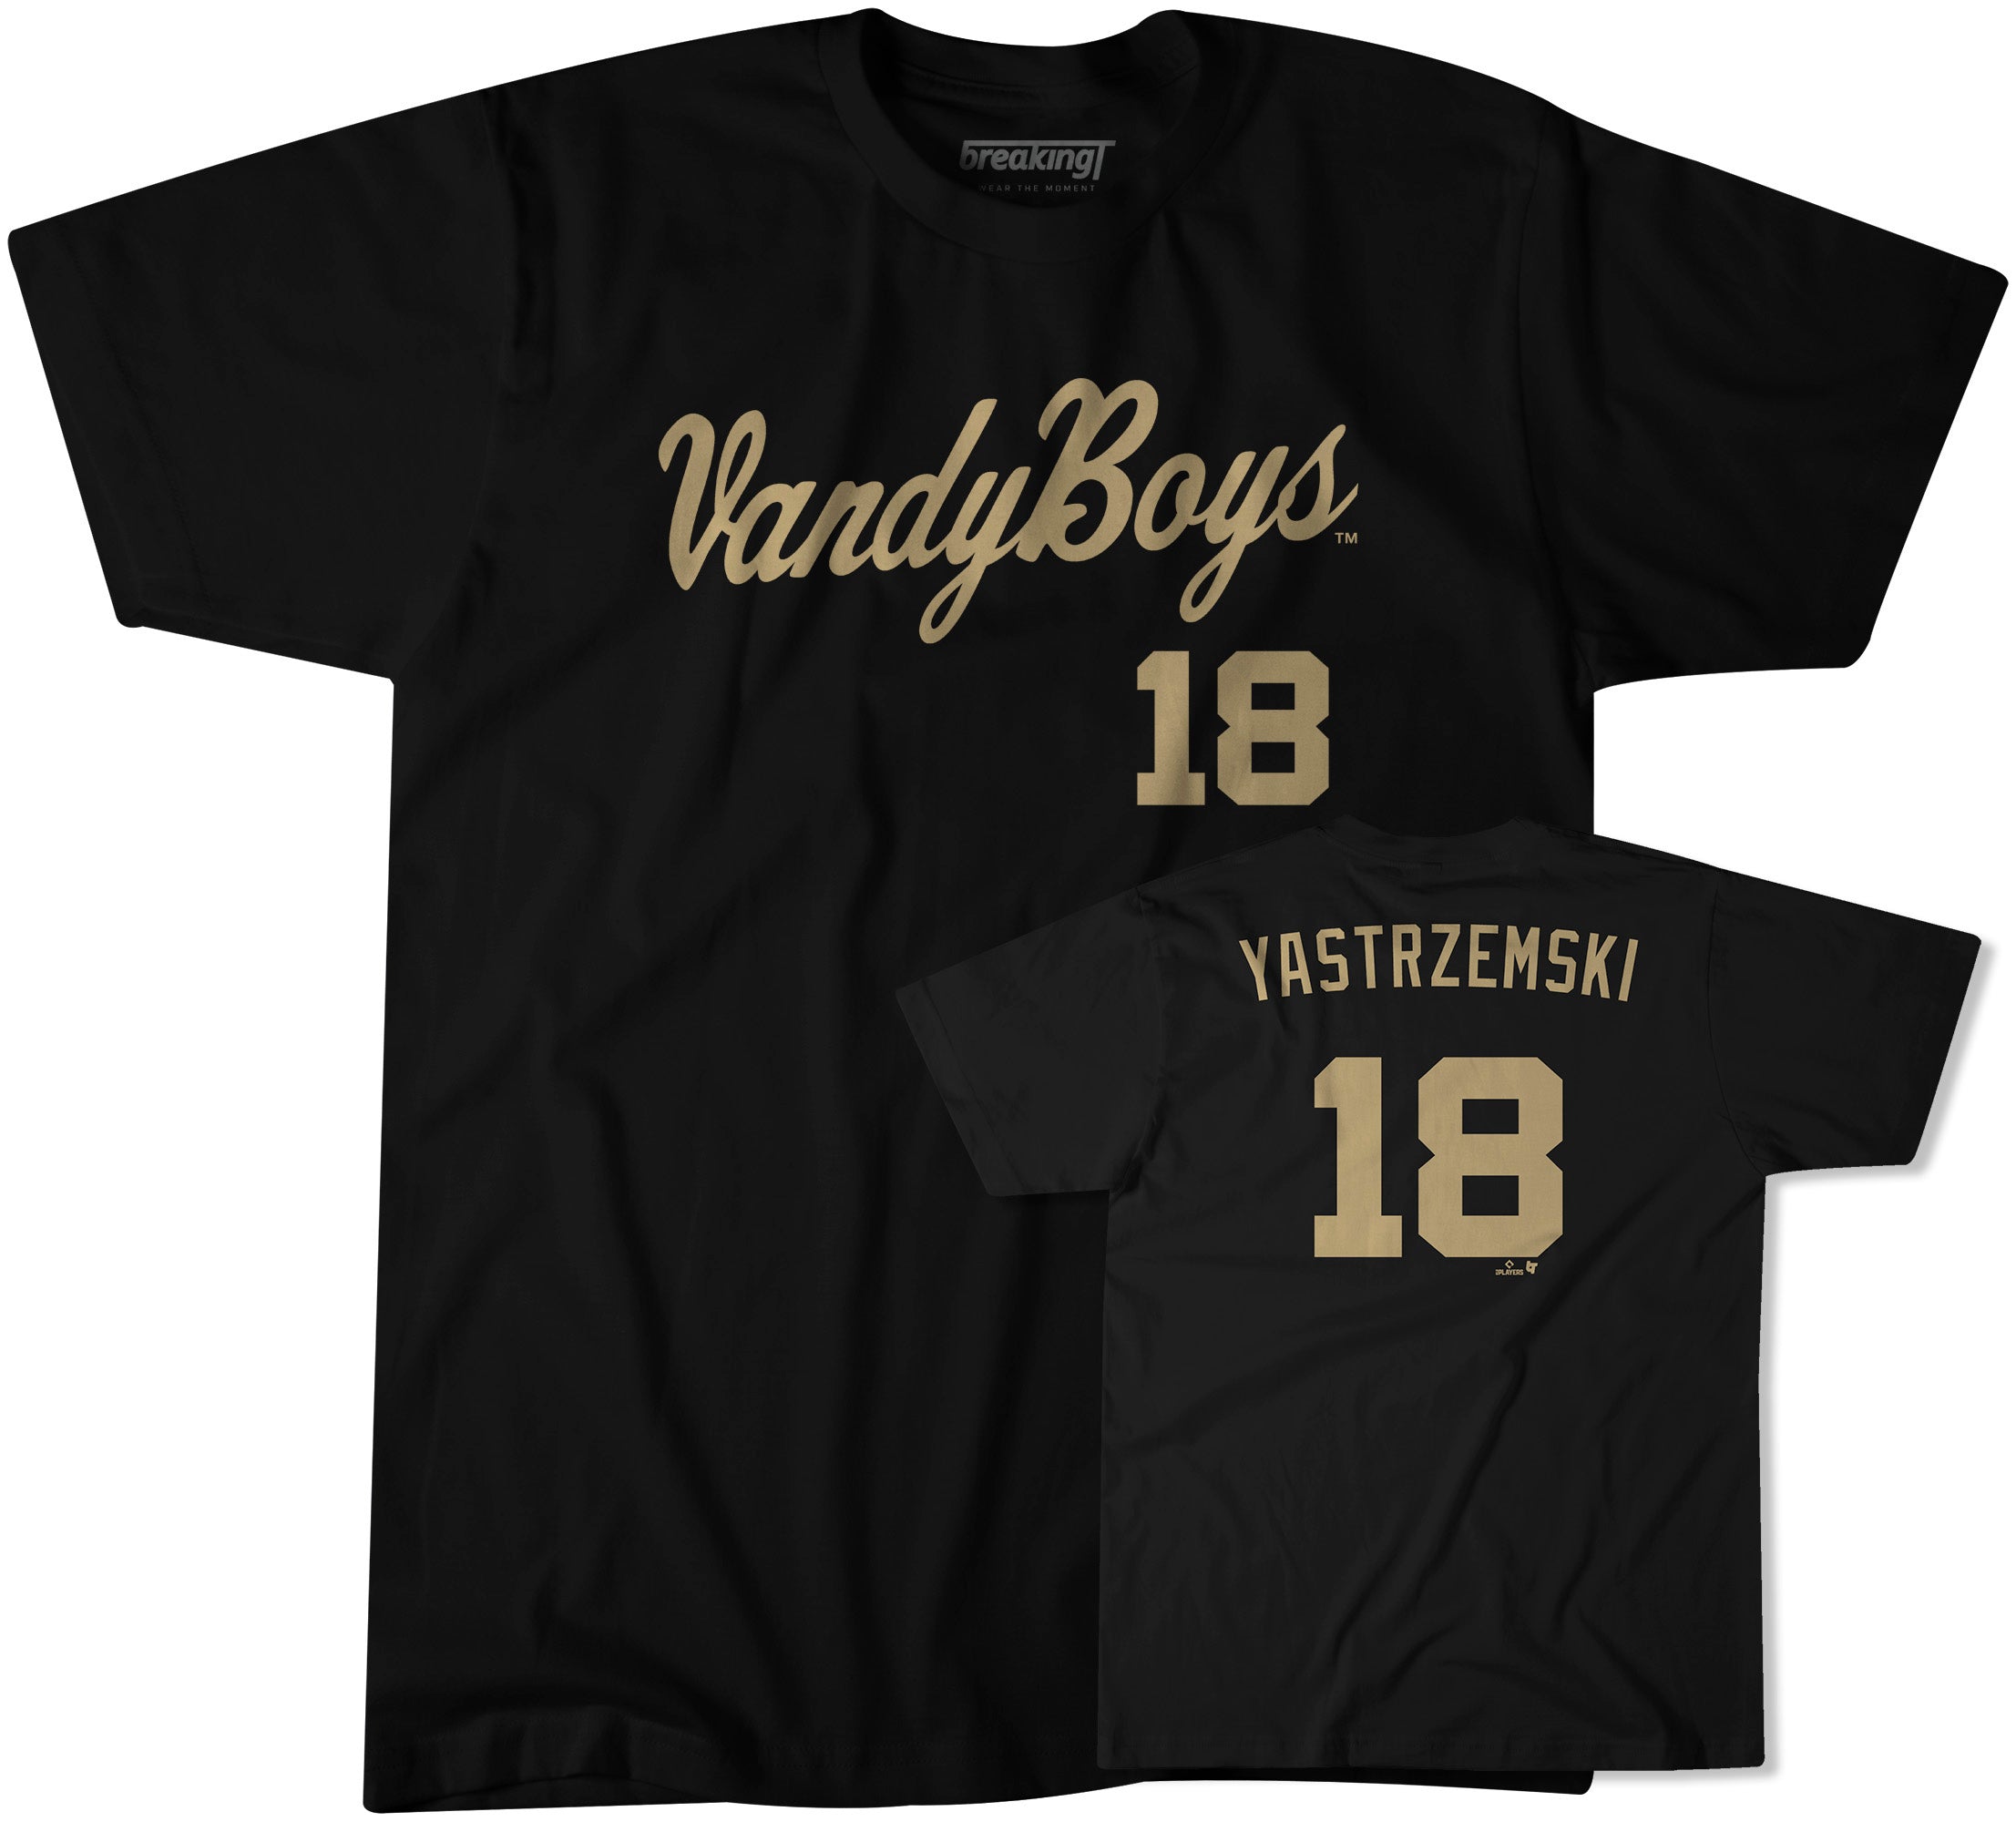 Mike Yastrzemski Vandy Boys Shirt - Officially Licensed - BreakingT